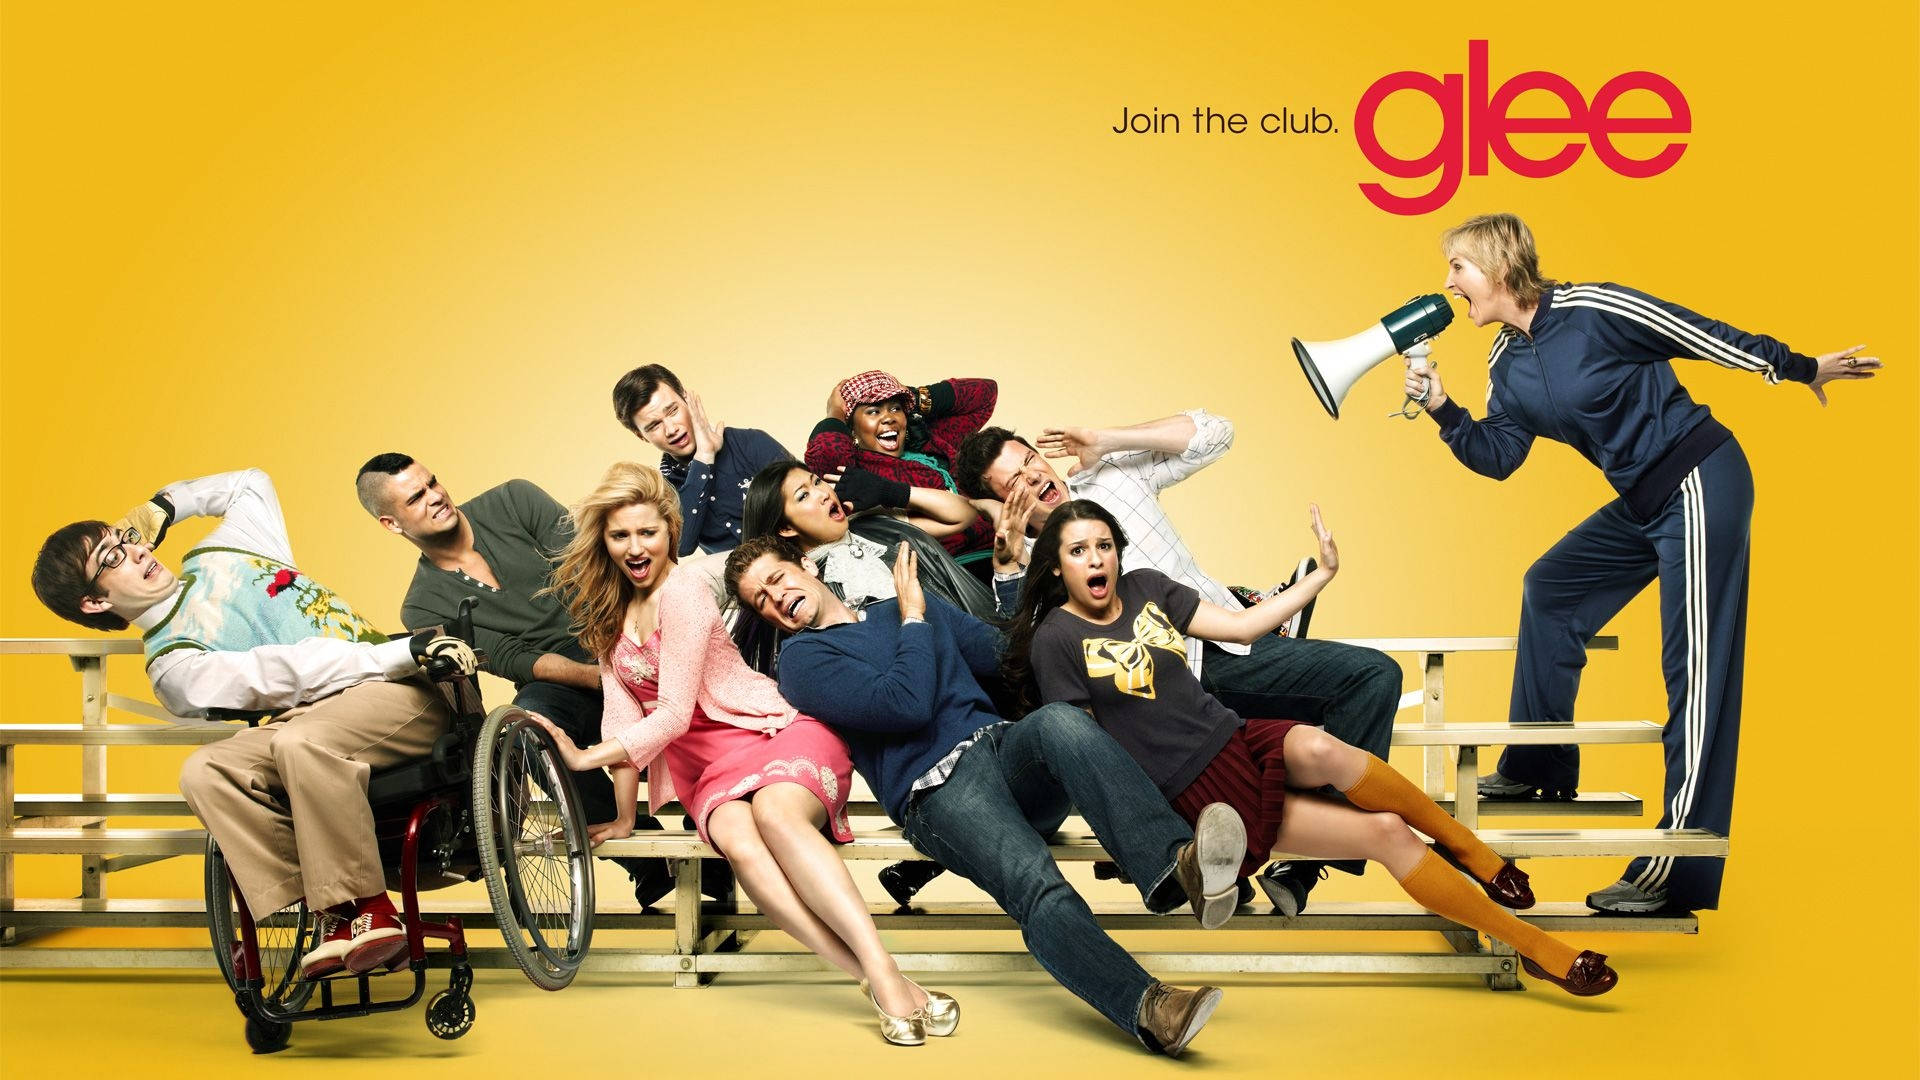 Miembrosdel Elenco De Glee Se Unen Al Club. Fondo de pantalla